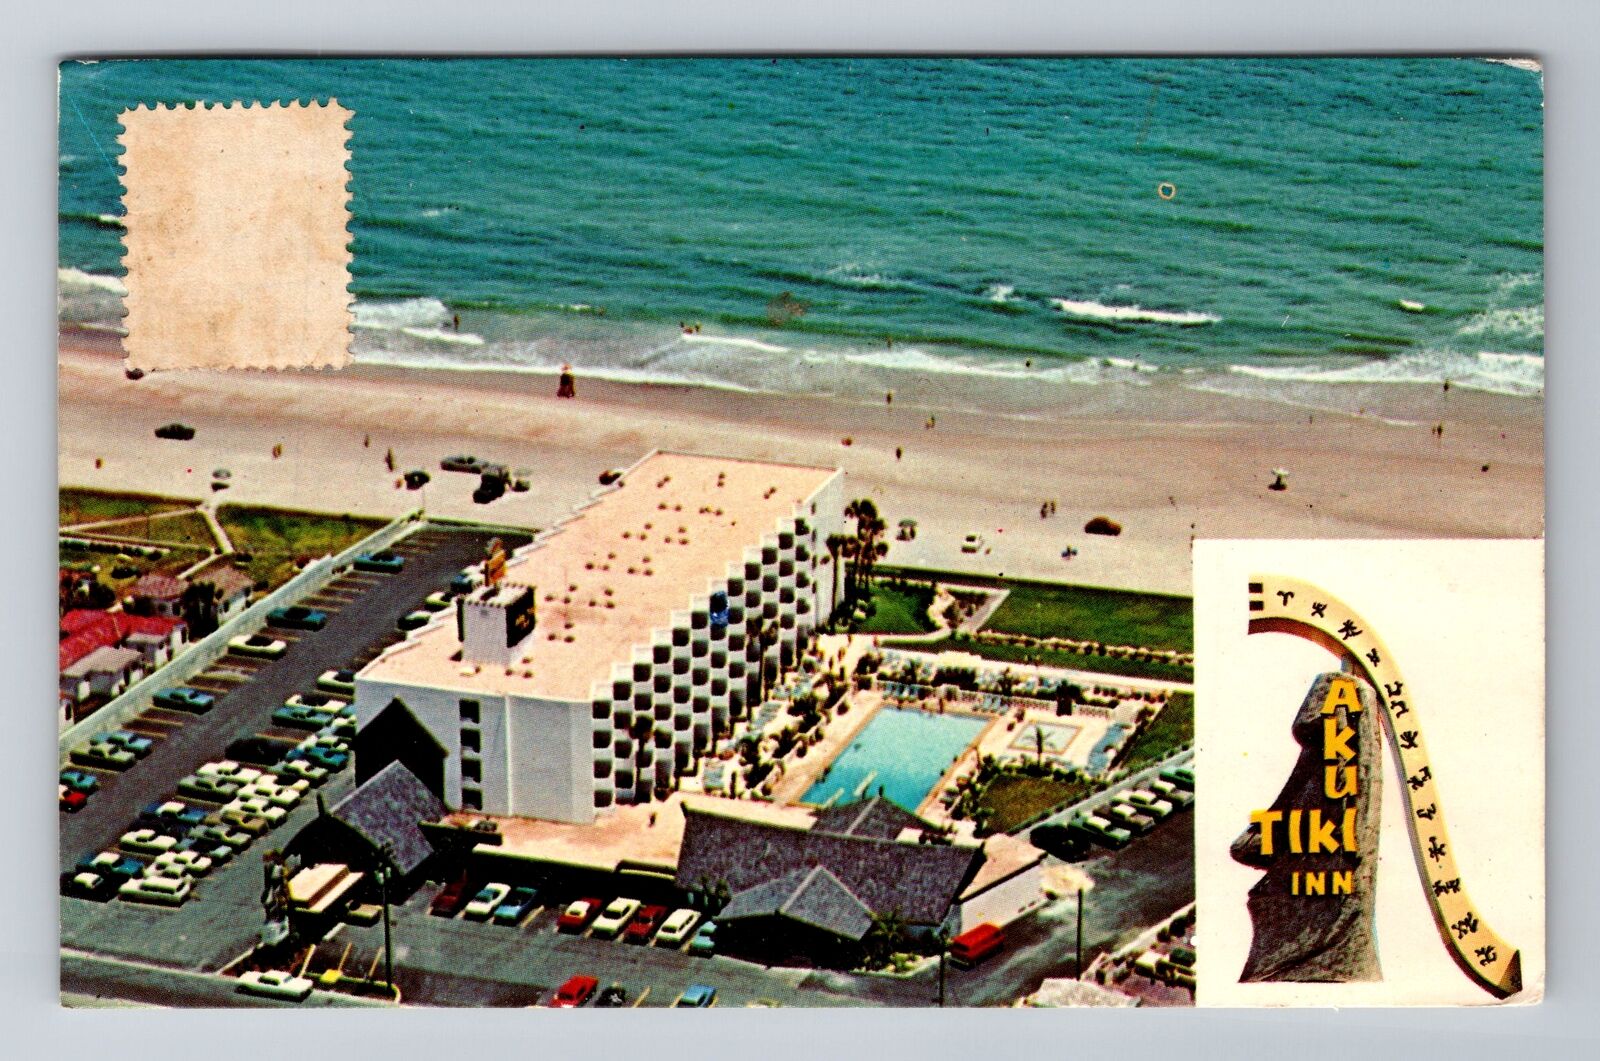 Daytona Beach Shores FL-Florida, Aku Tiki Inn, Advertise Vintage c1980 Postcard